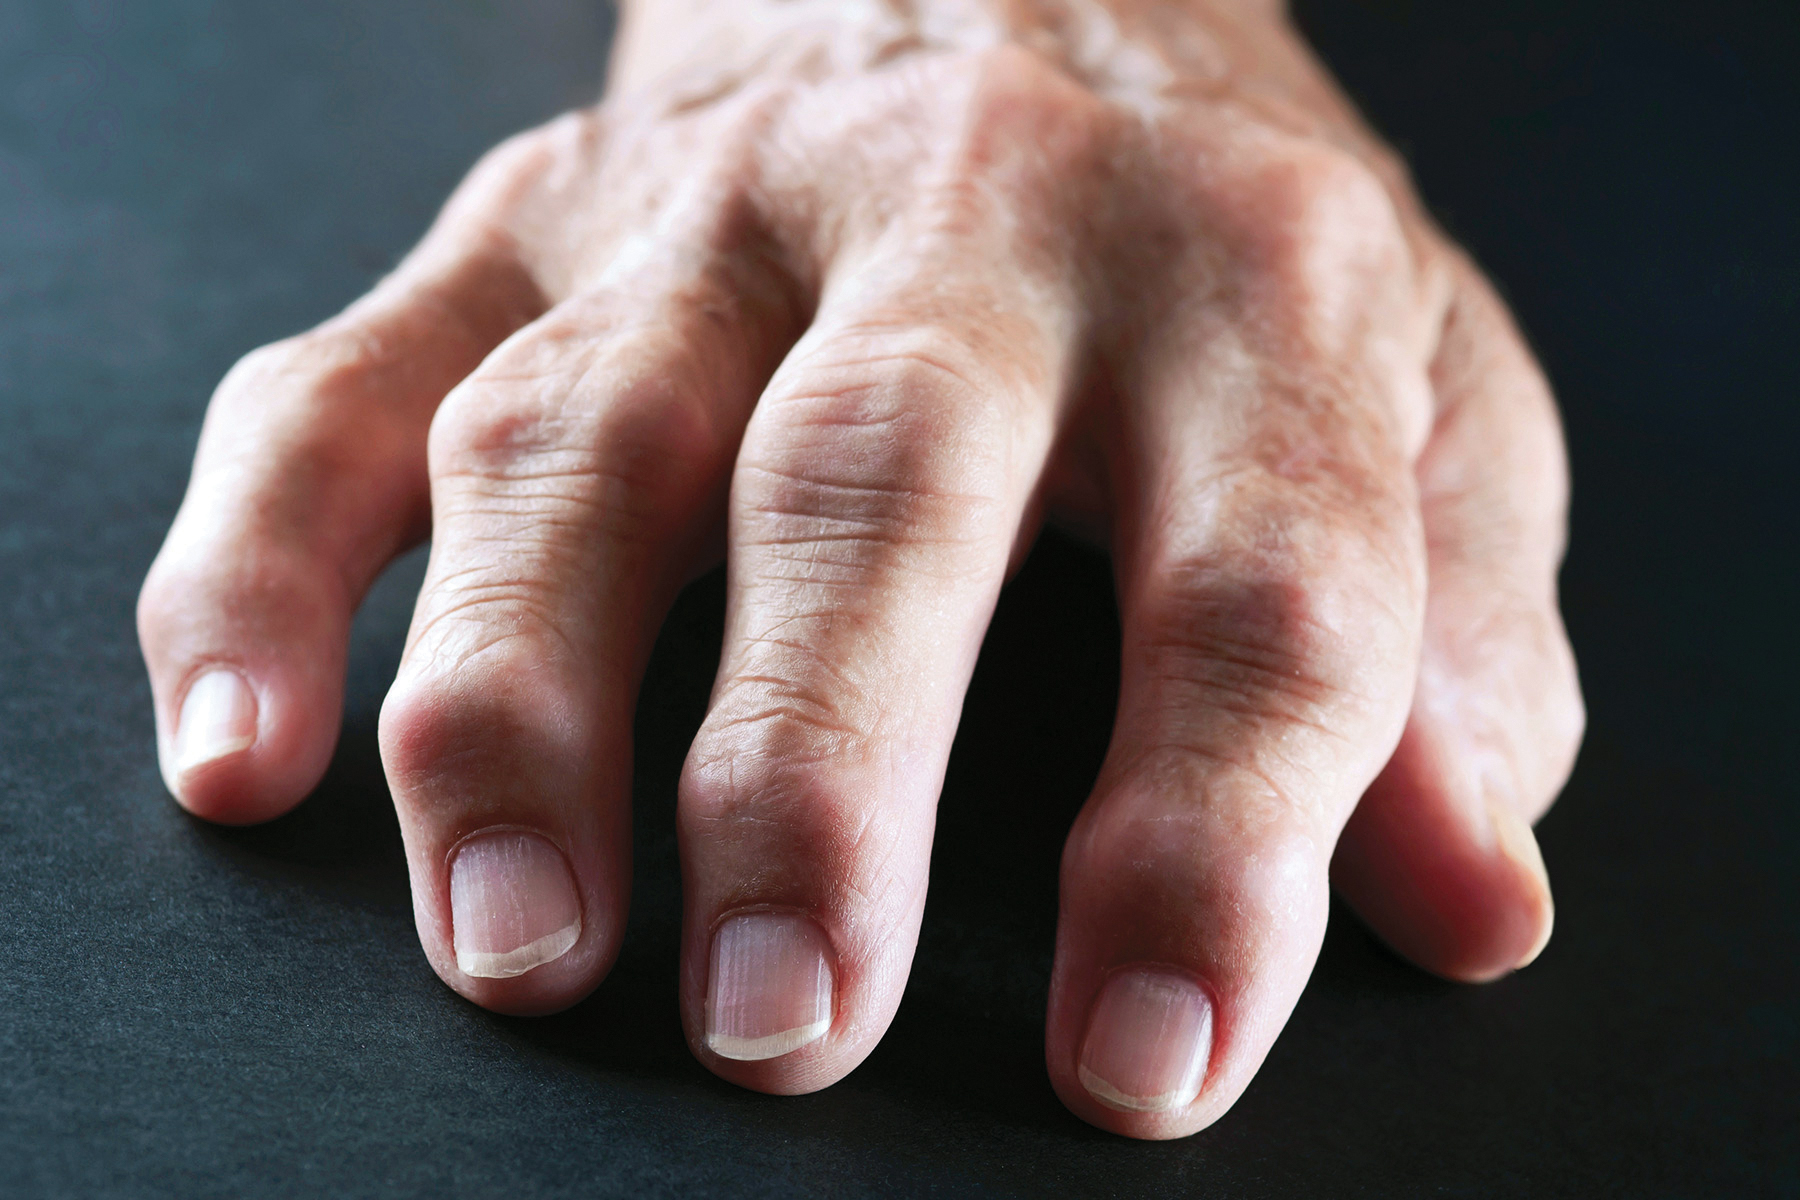 New Rheumatoid Arthritis Drug May Help Tough Cases